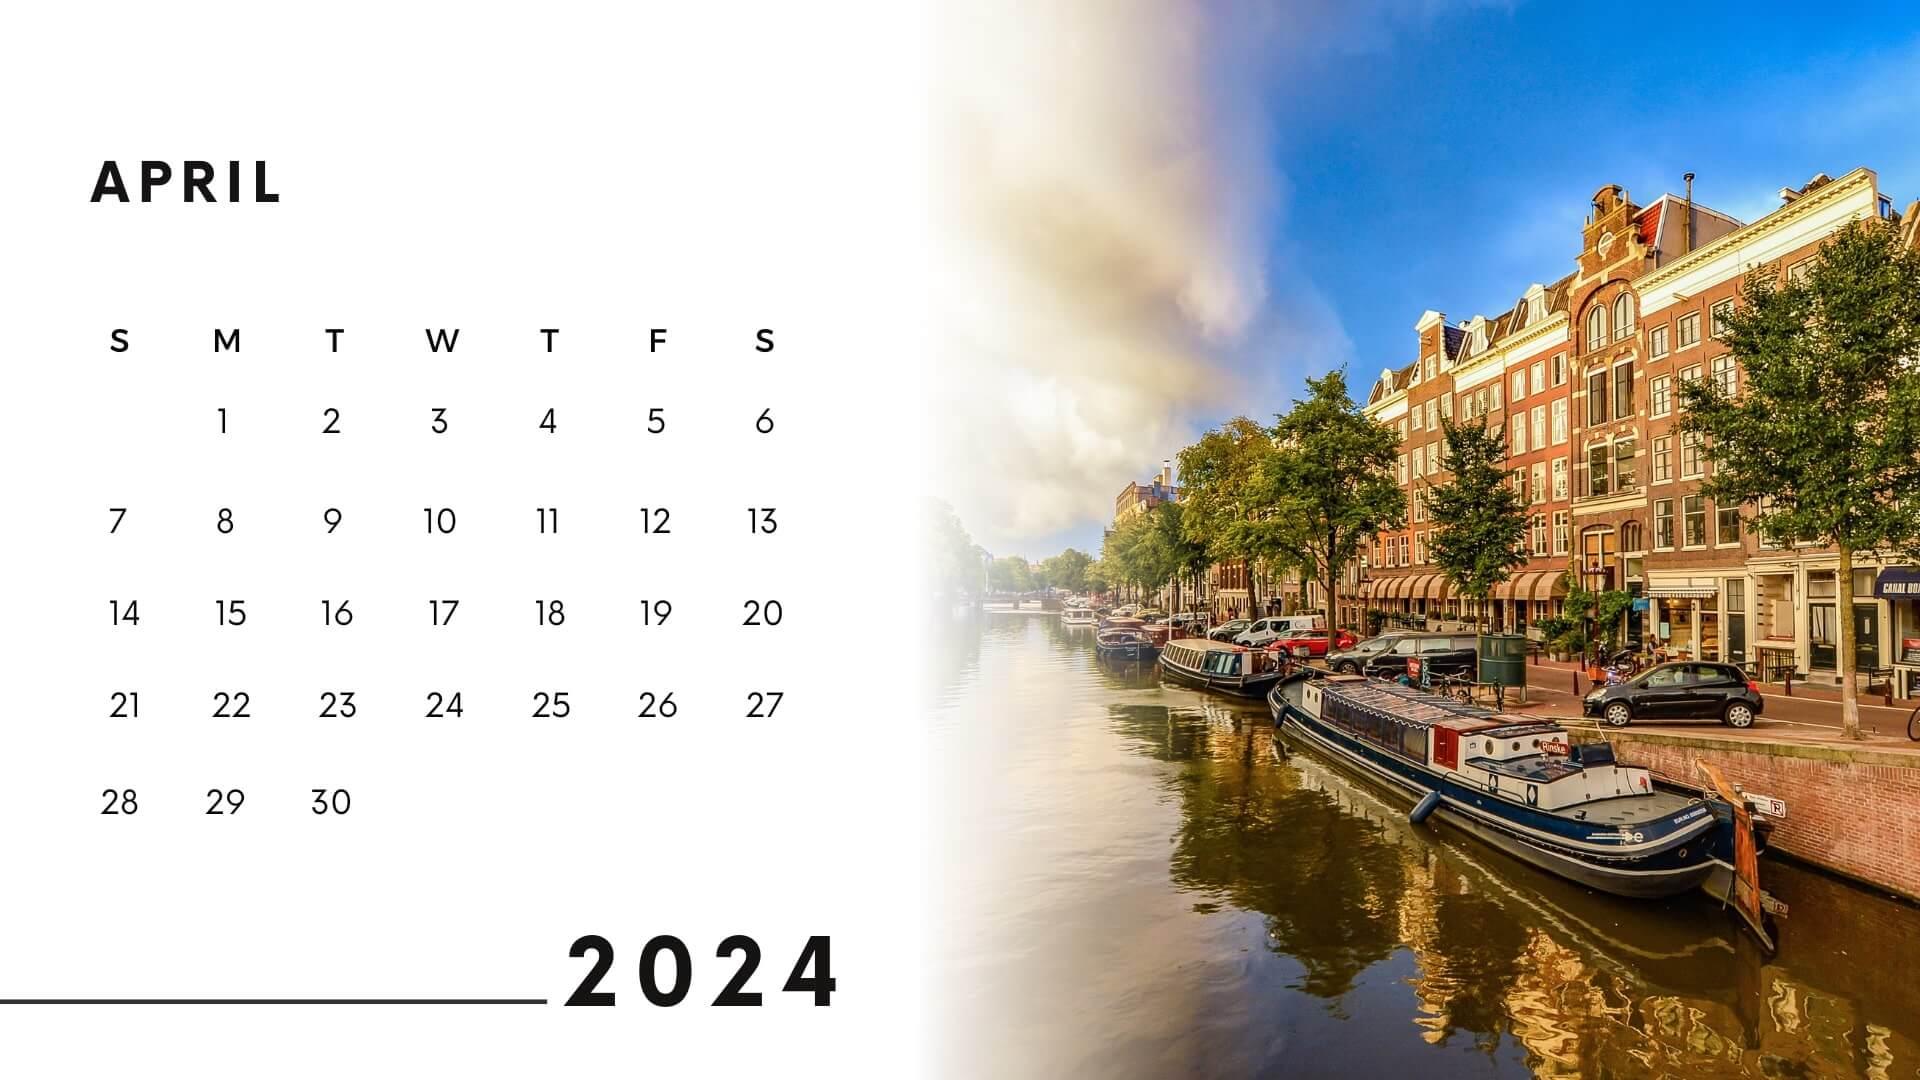 calendar 2024 april